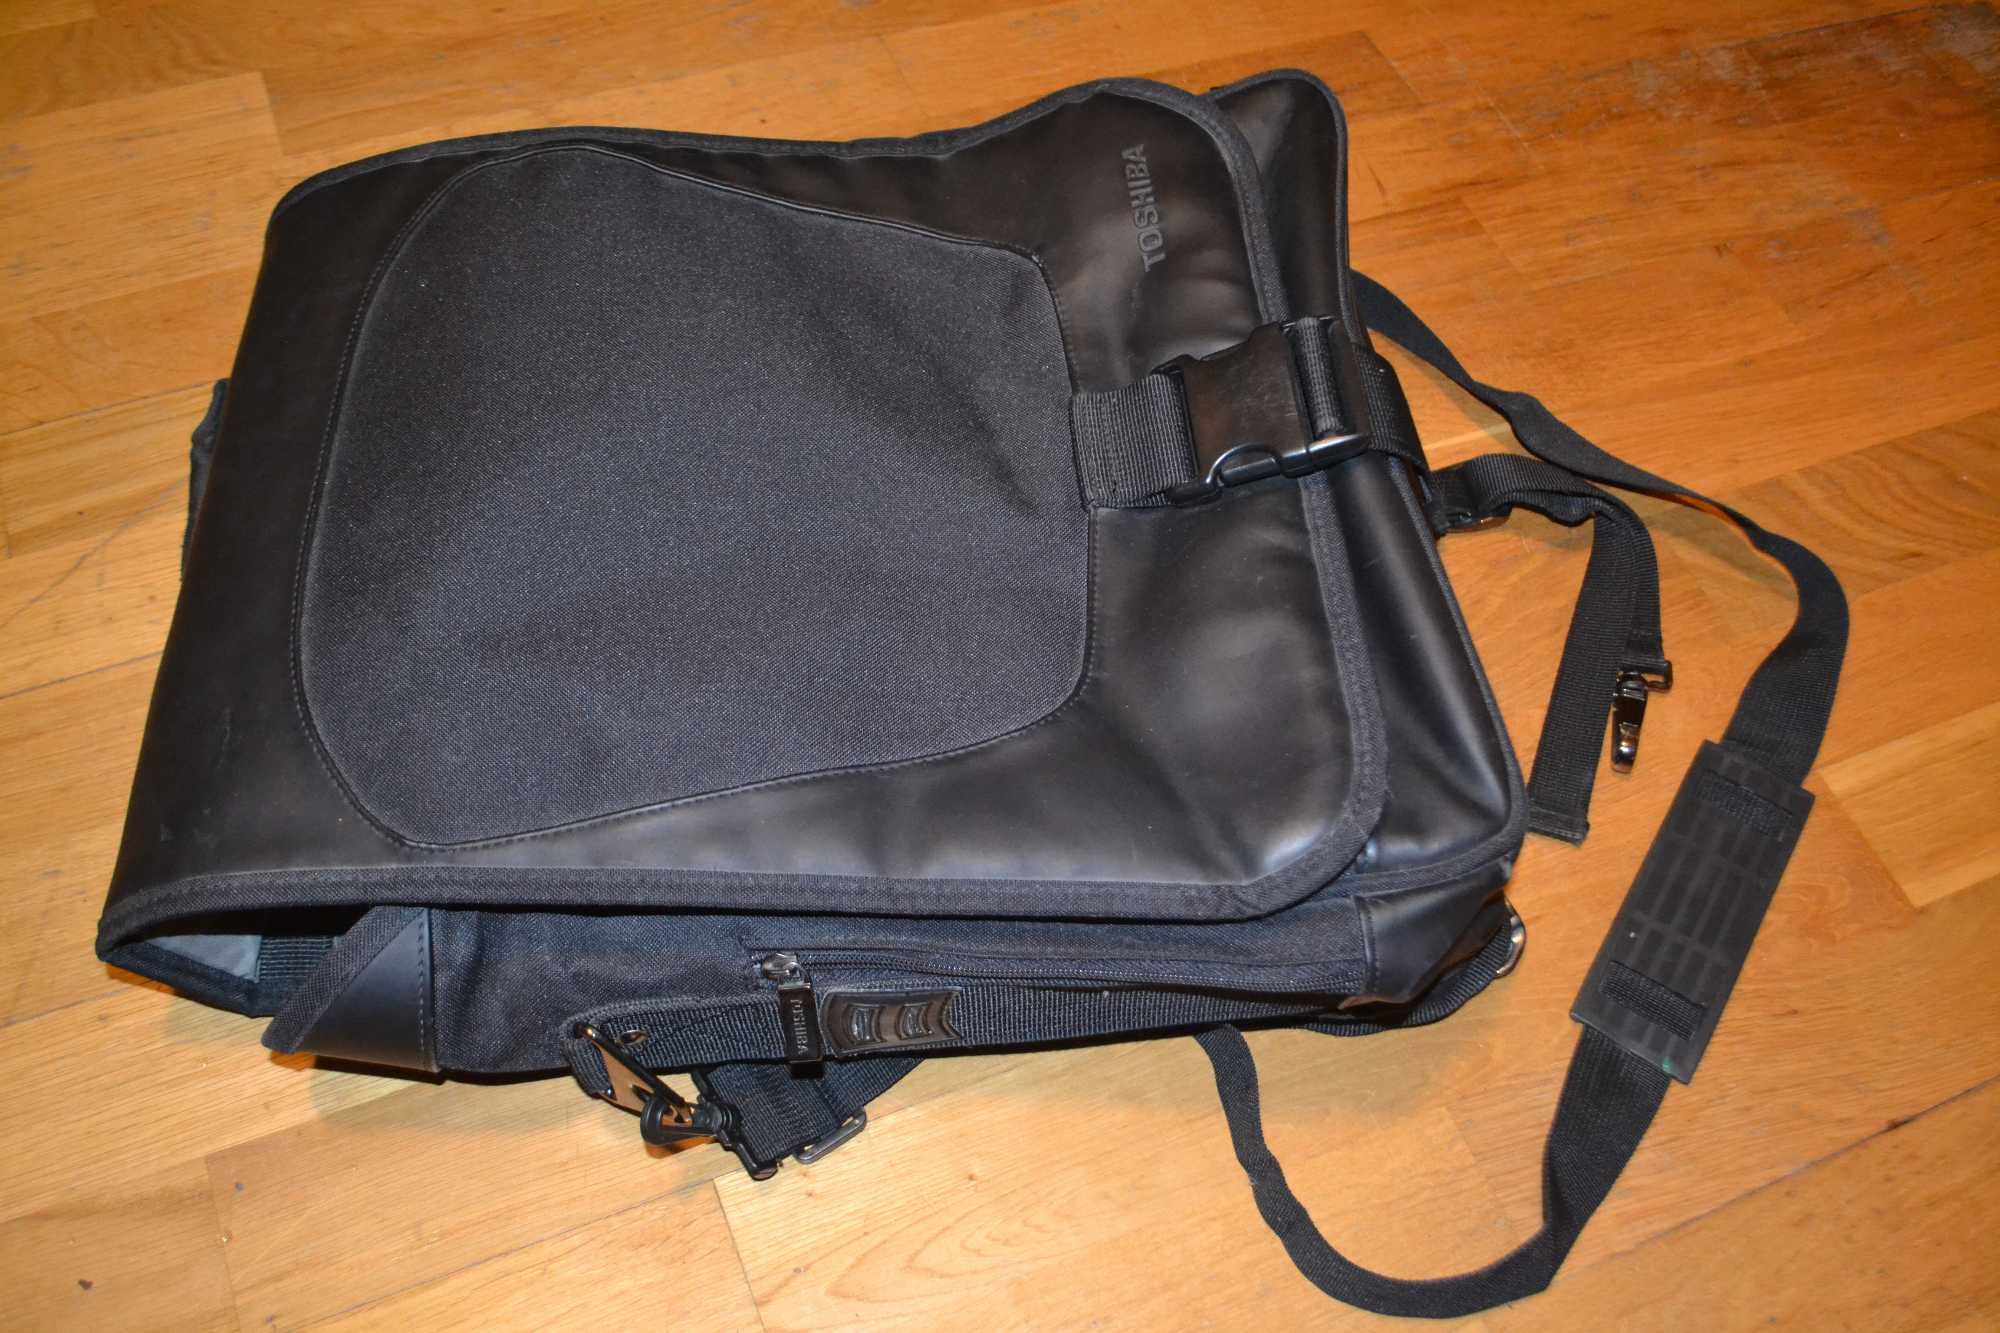 torba na laptopa - plecak Toshiba, 36 cm x 44 cm